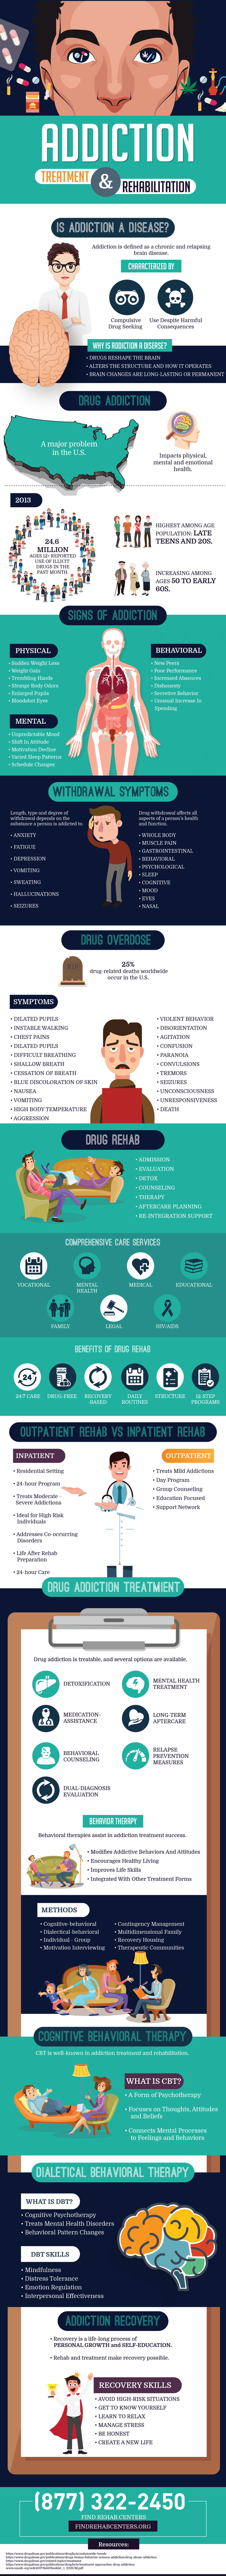 addiction treatment infographic